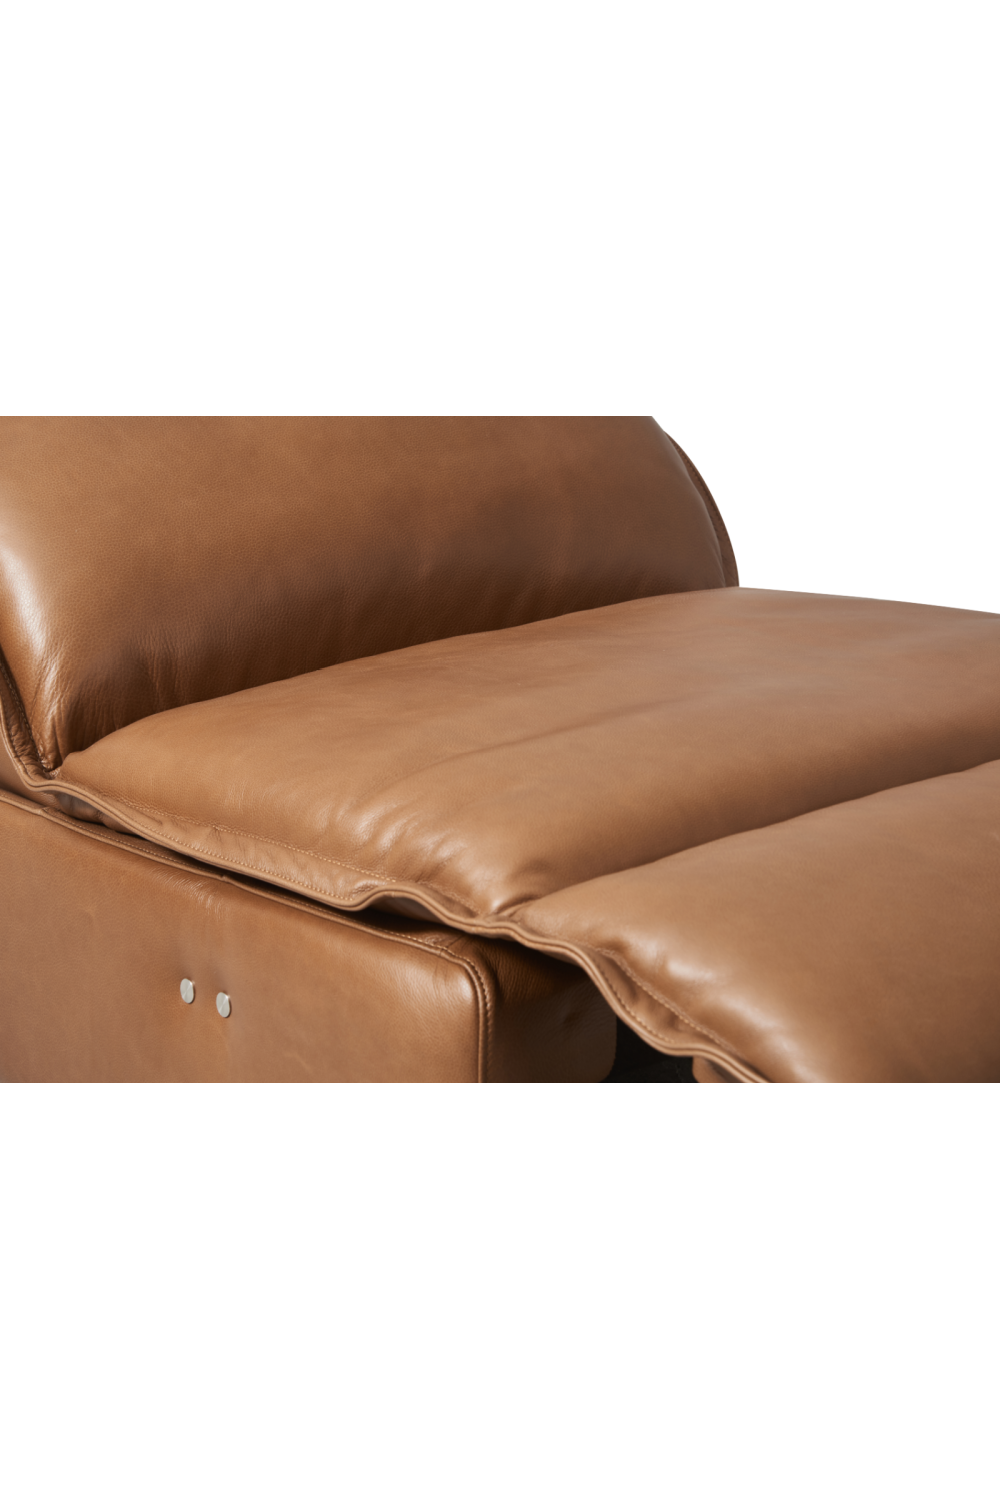 Brown Leather Reclining Chair | Andrew Martin Preston | Oroa.com